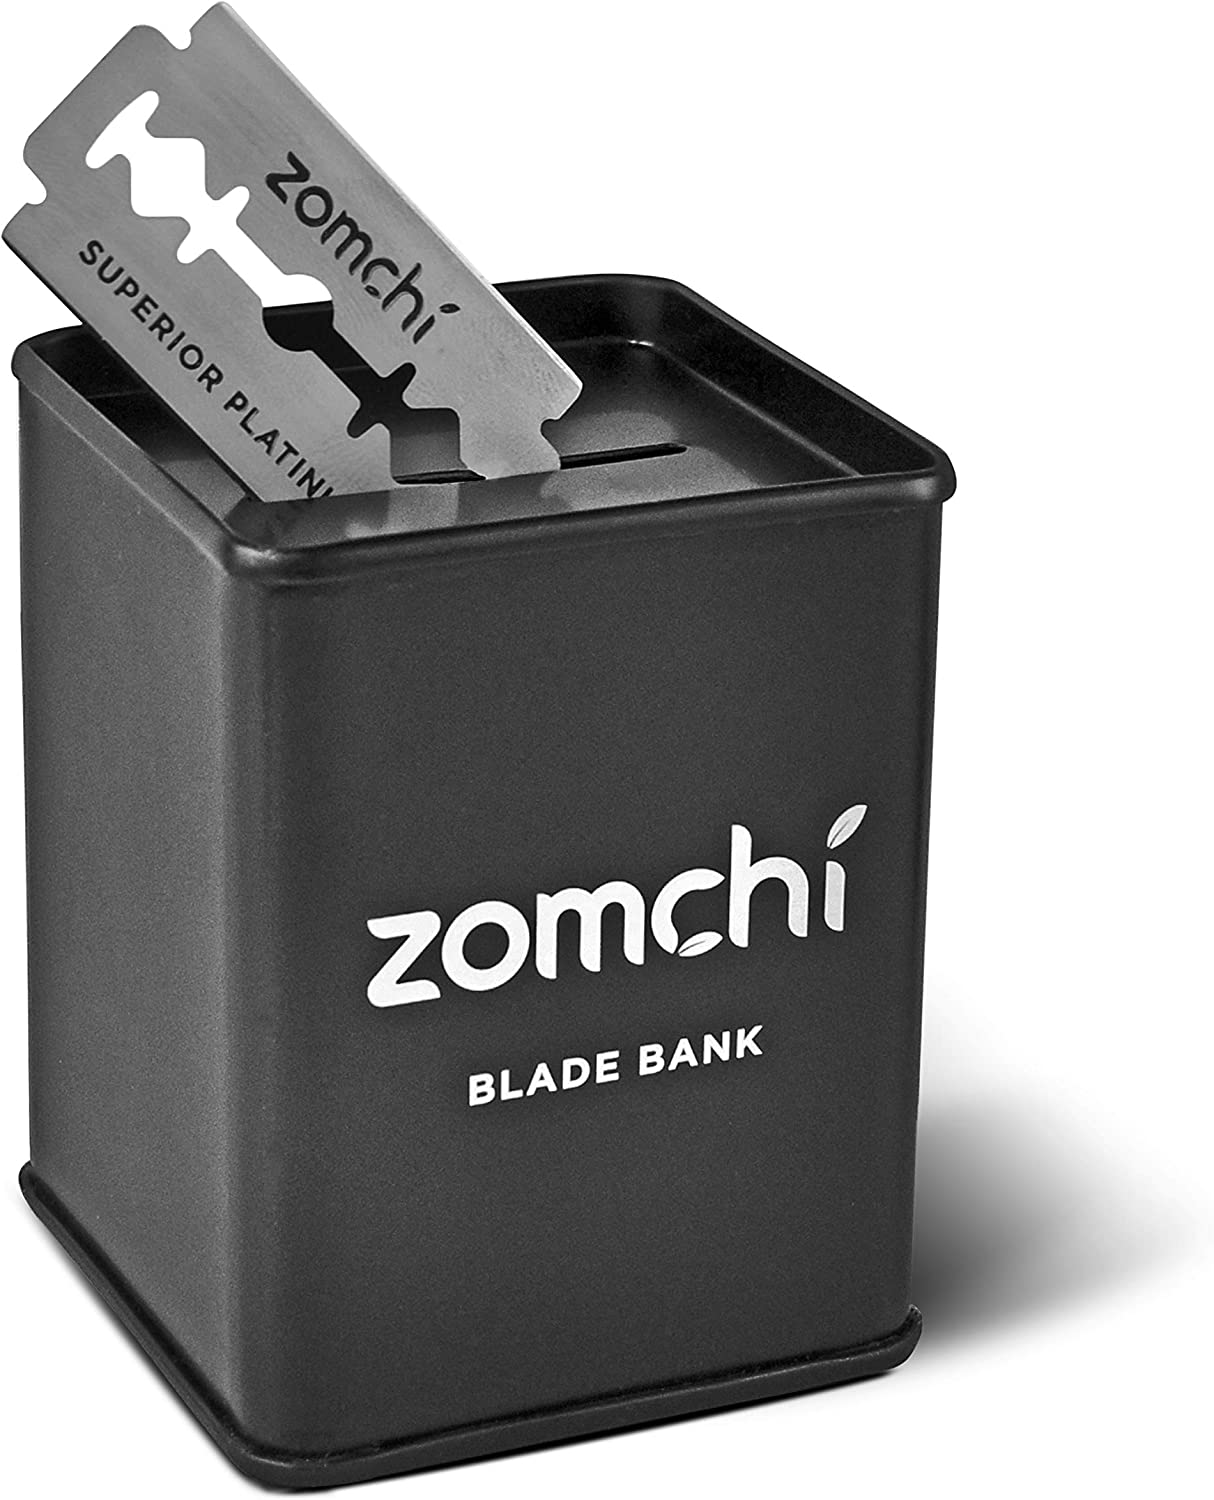 Zomchi Razor Blades Bank